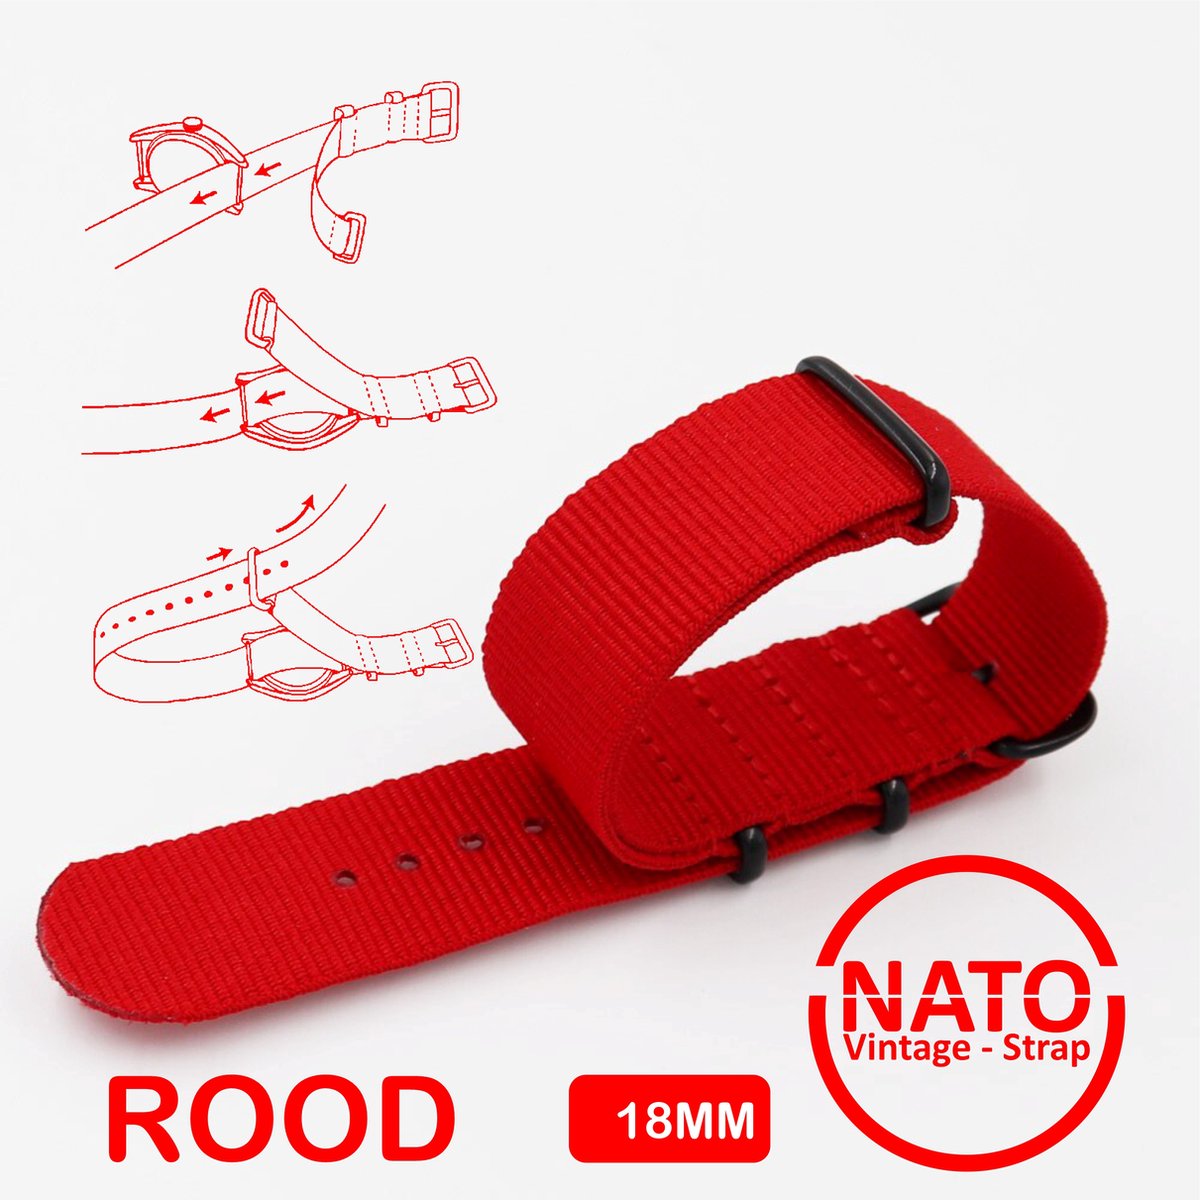 18mm Premium Nato Strap ROOD met zwarte gesp - Vintage James Bond - Nato Strap collectie - Mannen - Vrouwen - Horlogeband - 18 mm bandbreedte voor oa. Seiko Rolex Omega Casio en Citizen